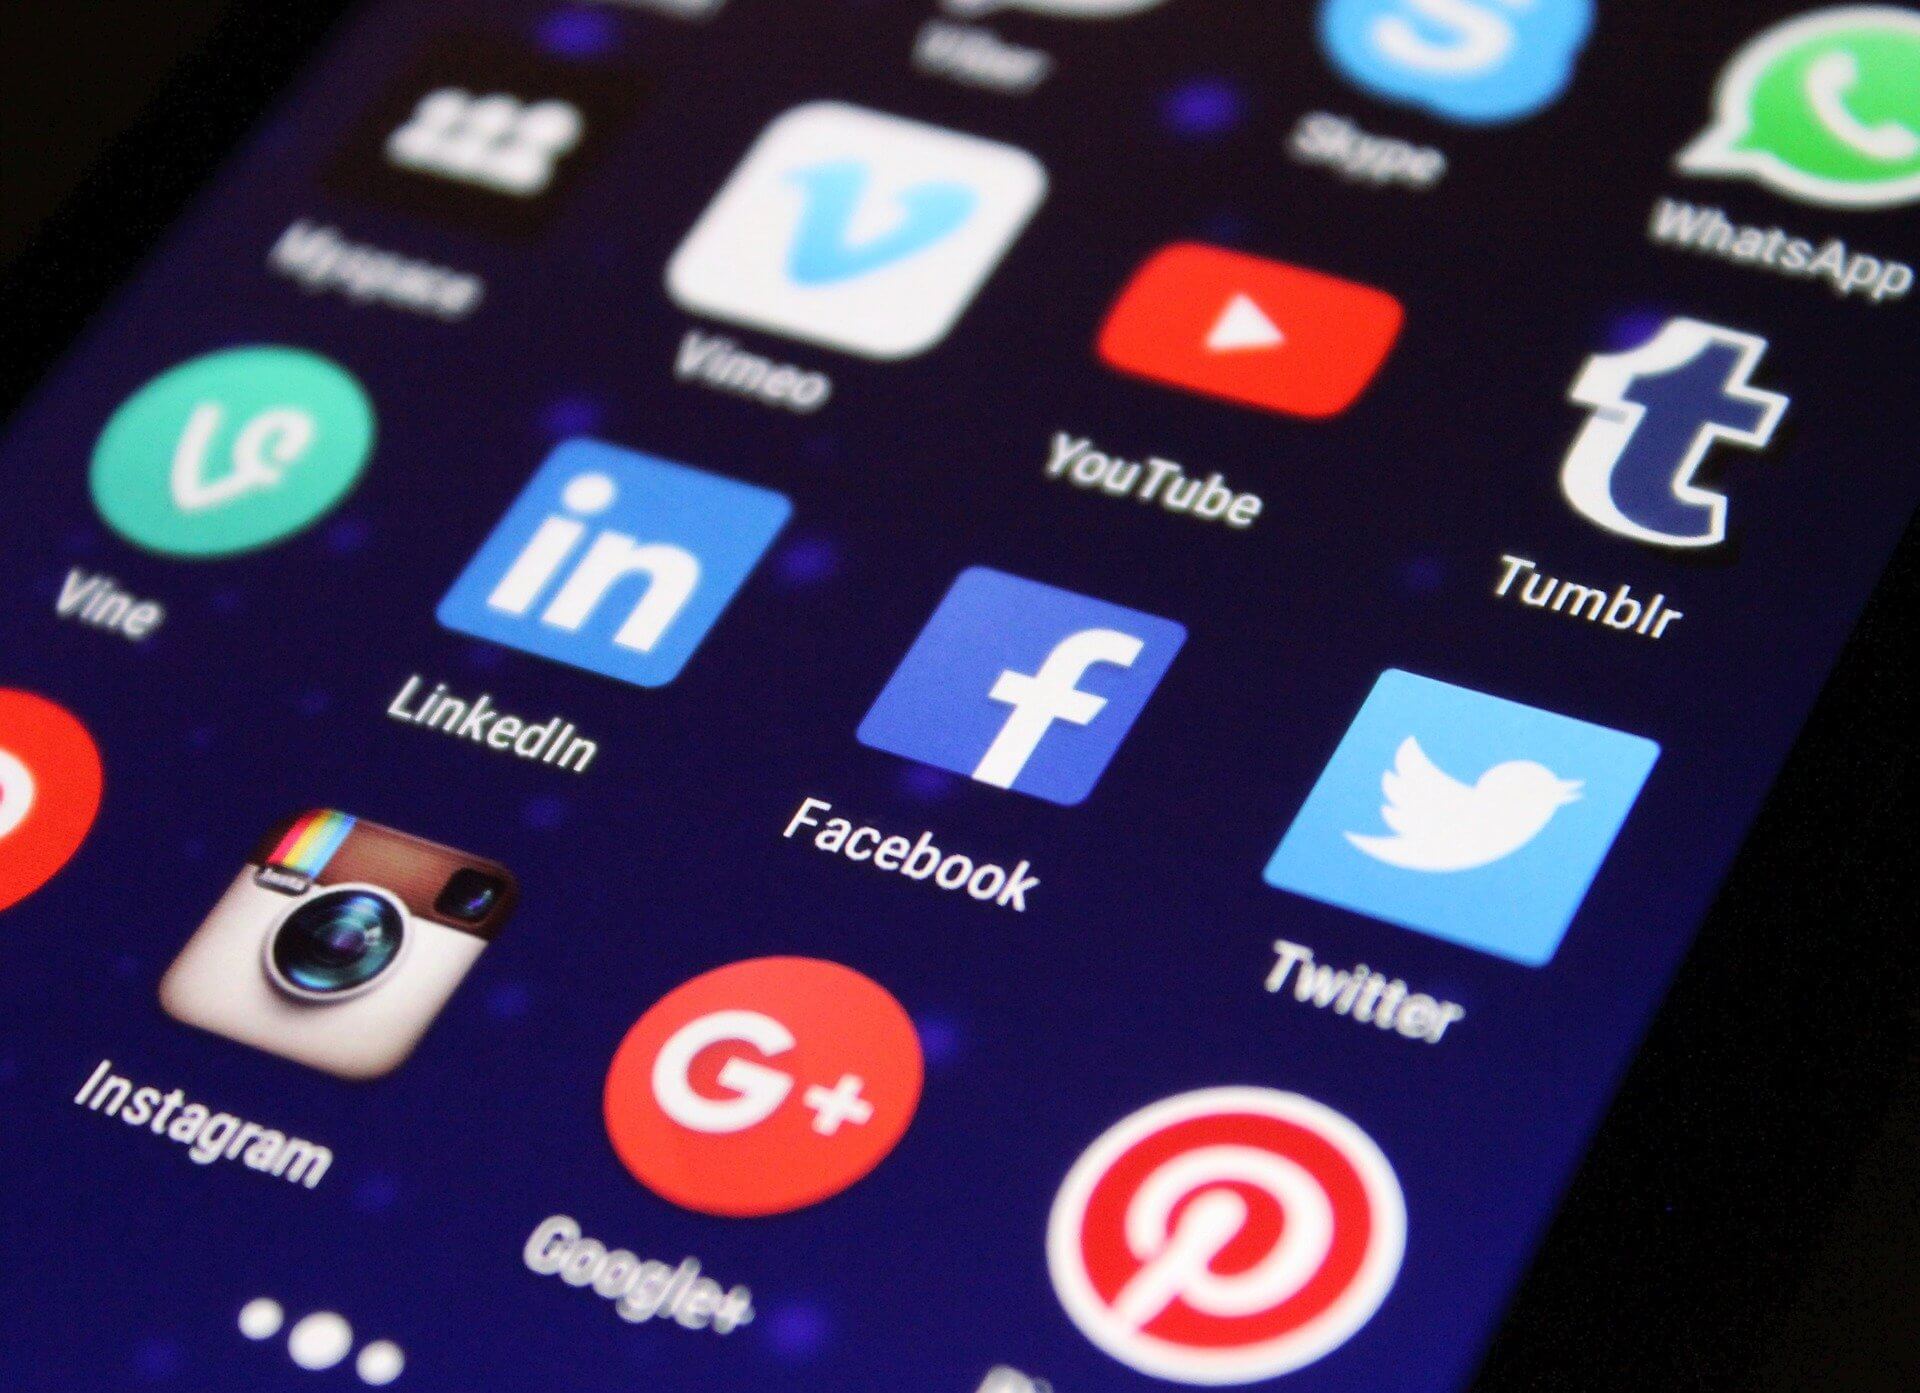 social media apps on phone screen